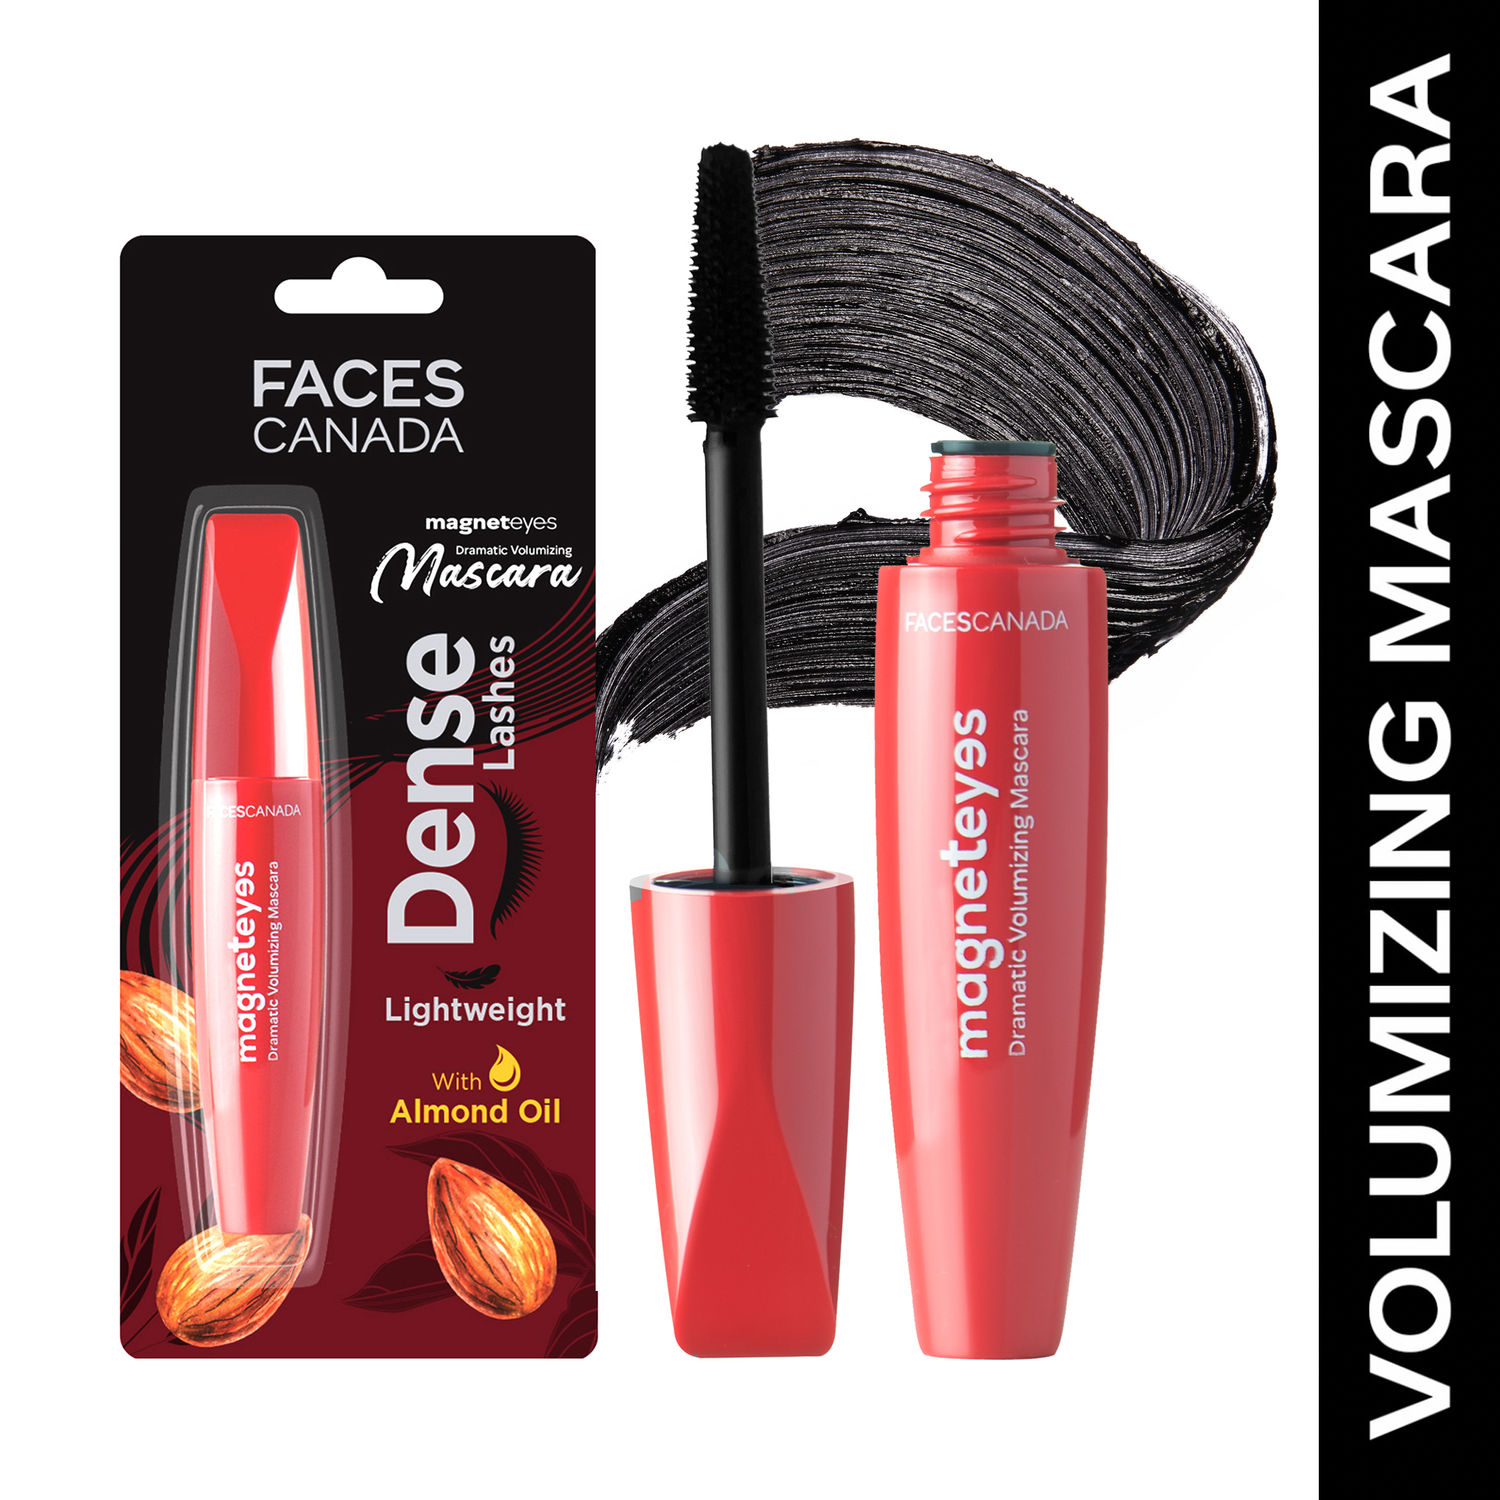 Buy FACES CANADA Magneteyes Dramatic Volumizing Mascara - Black, 9.5ml | Lightweight, Denser & Longer Lashes | Intense Black Finish | Long Lasting | With Almond Oil - Purplle